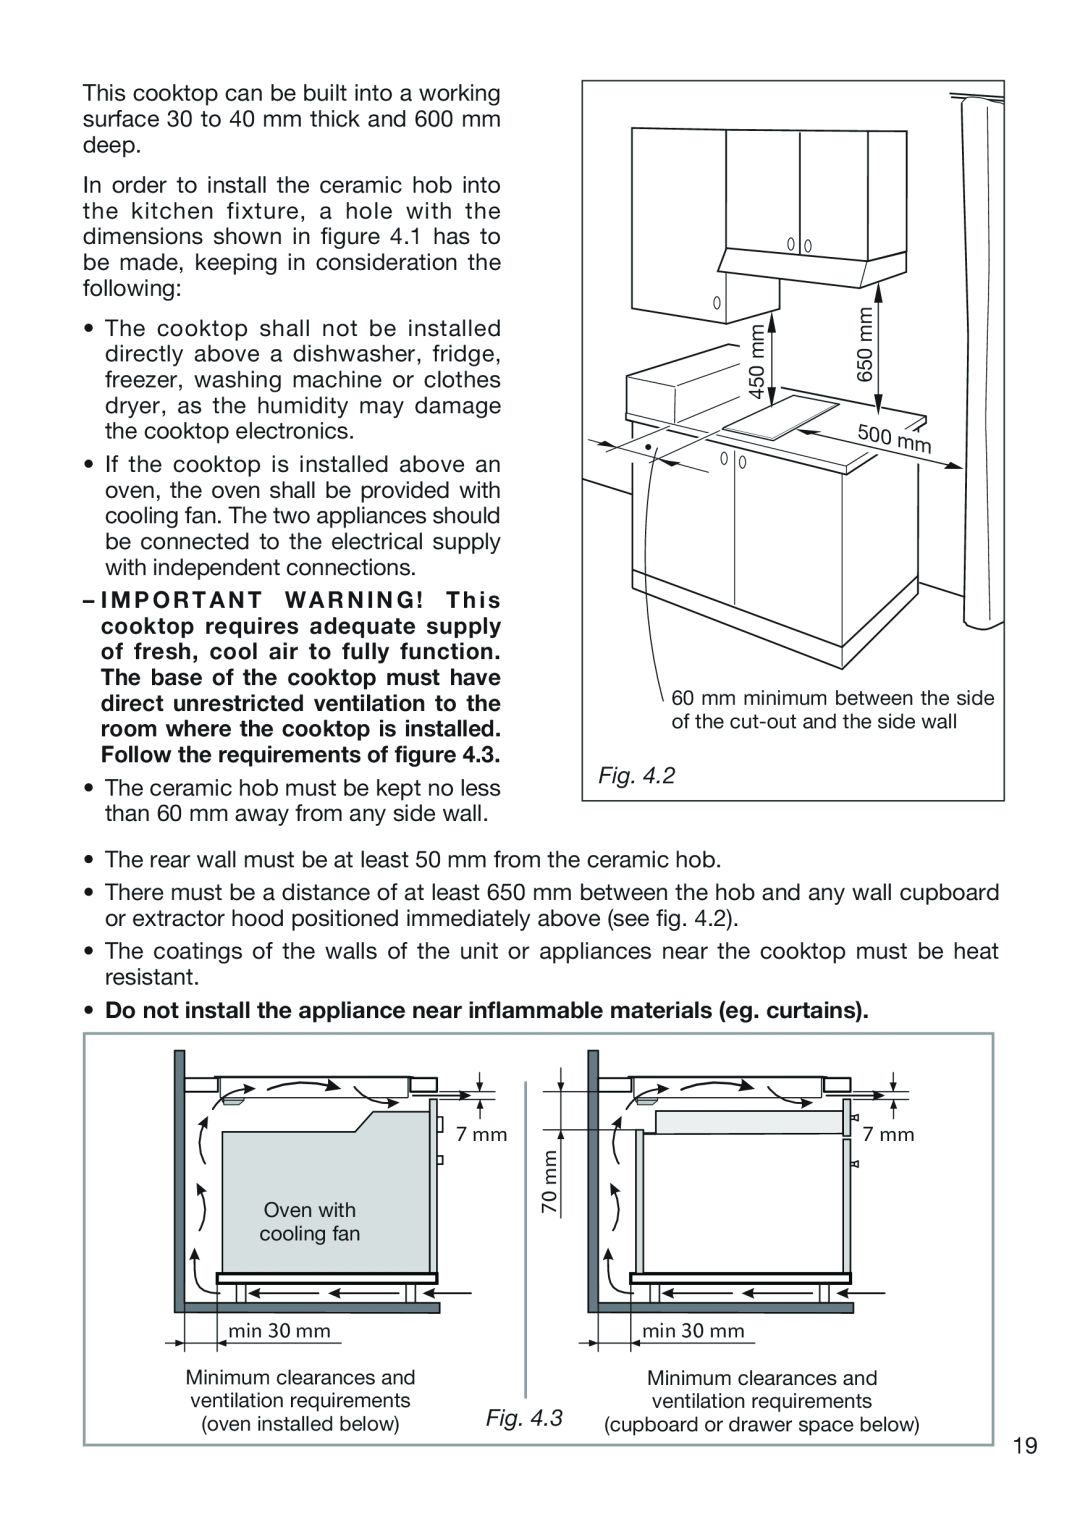 DeLonghi DE302IB manual Do not install the appliance near inflammable materials eg. curtains 